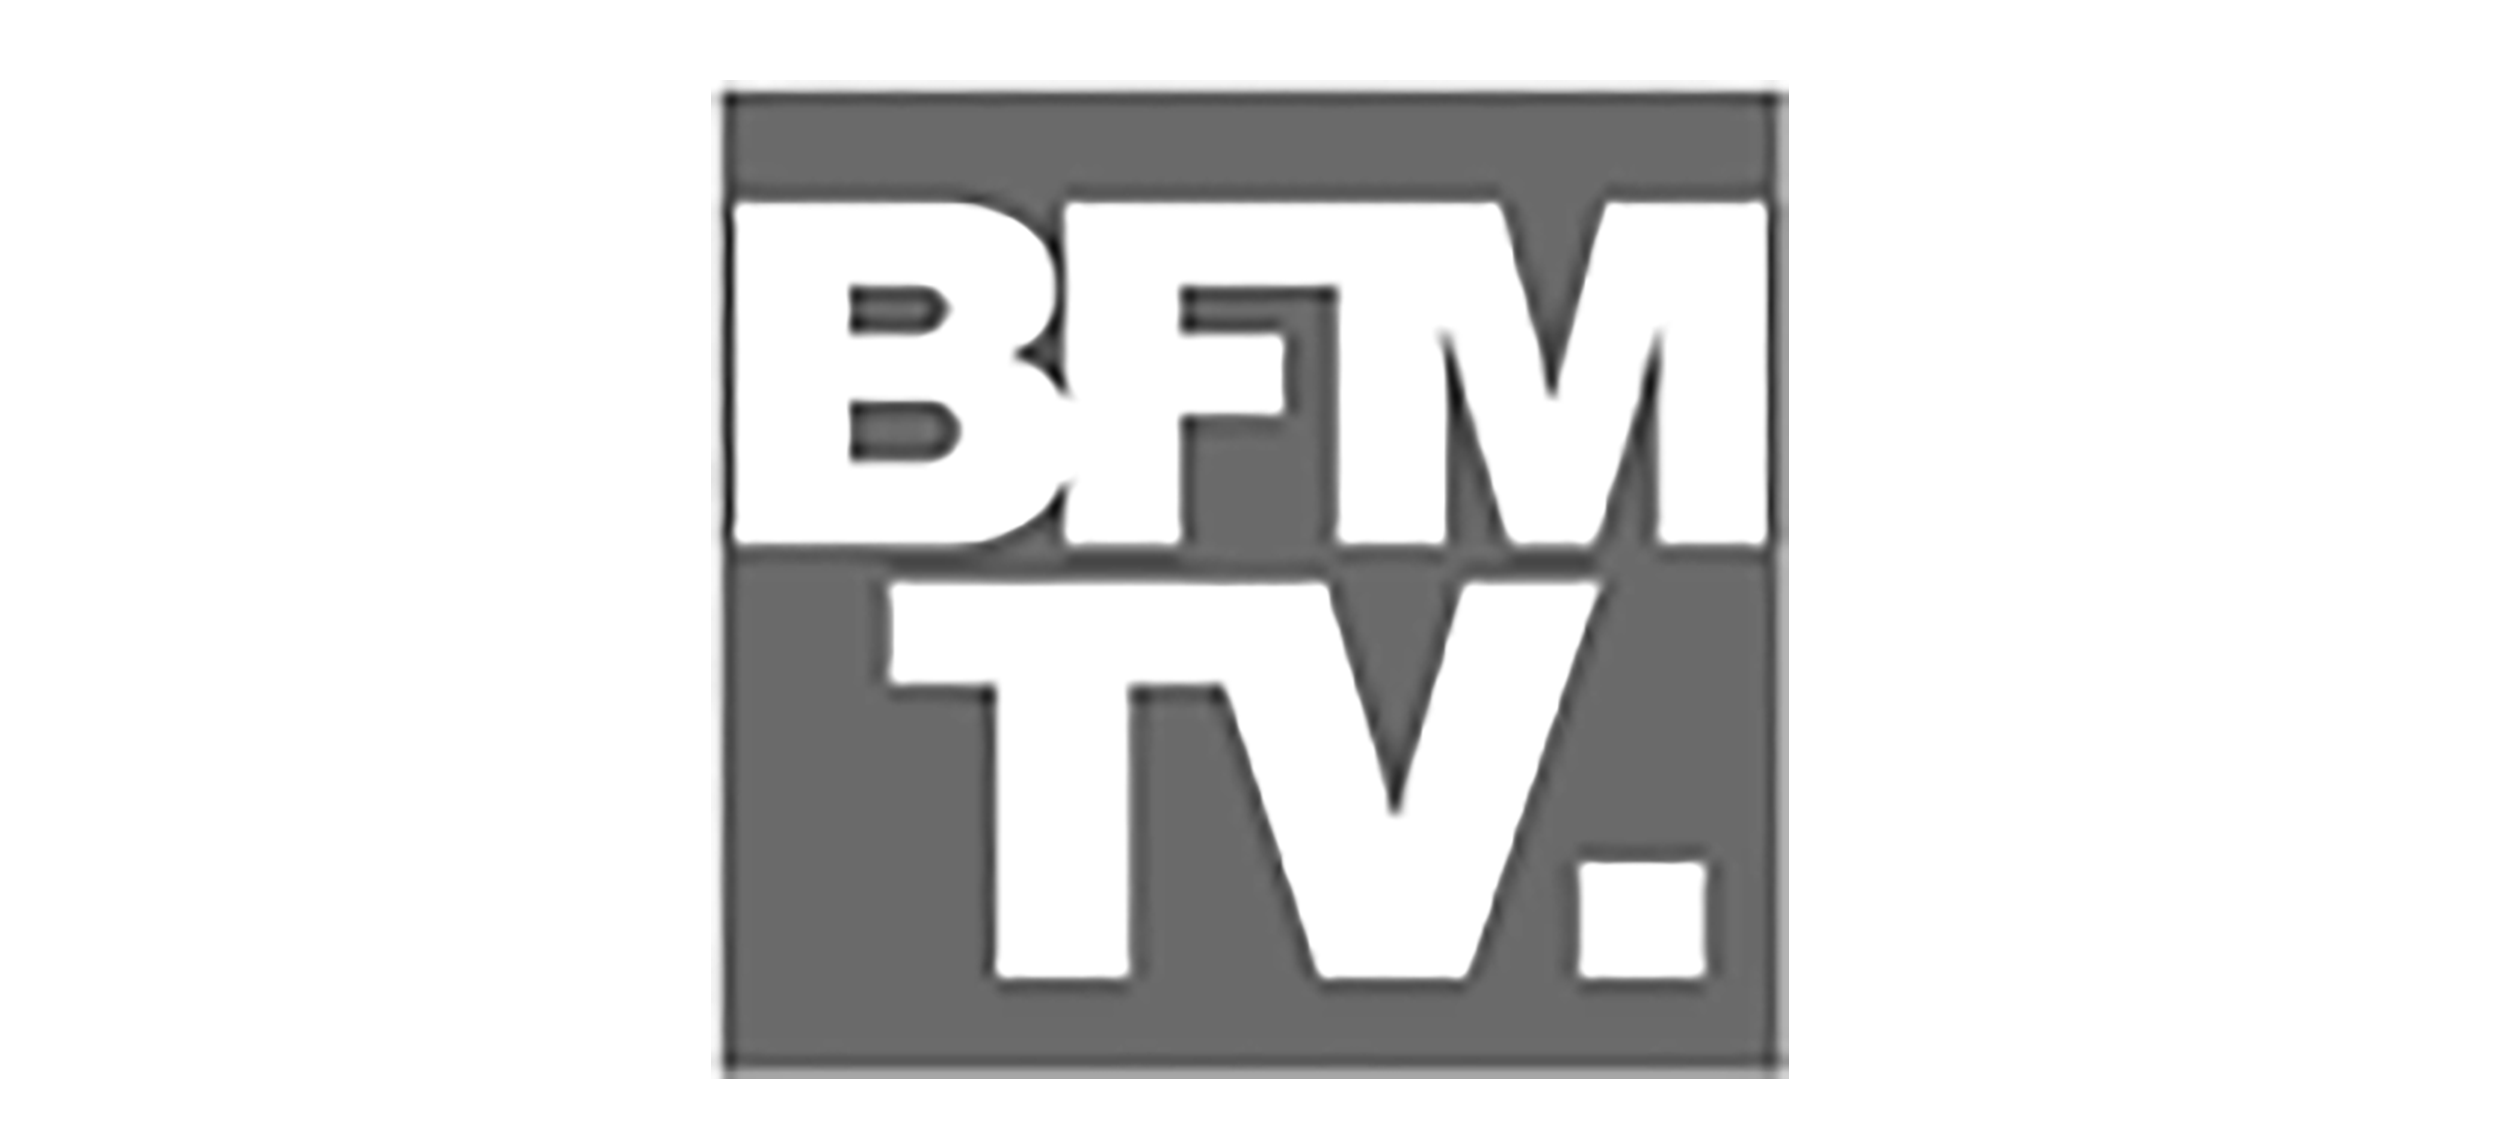 Logo de BFM TV.